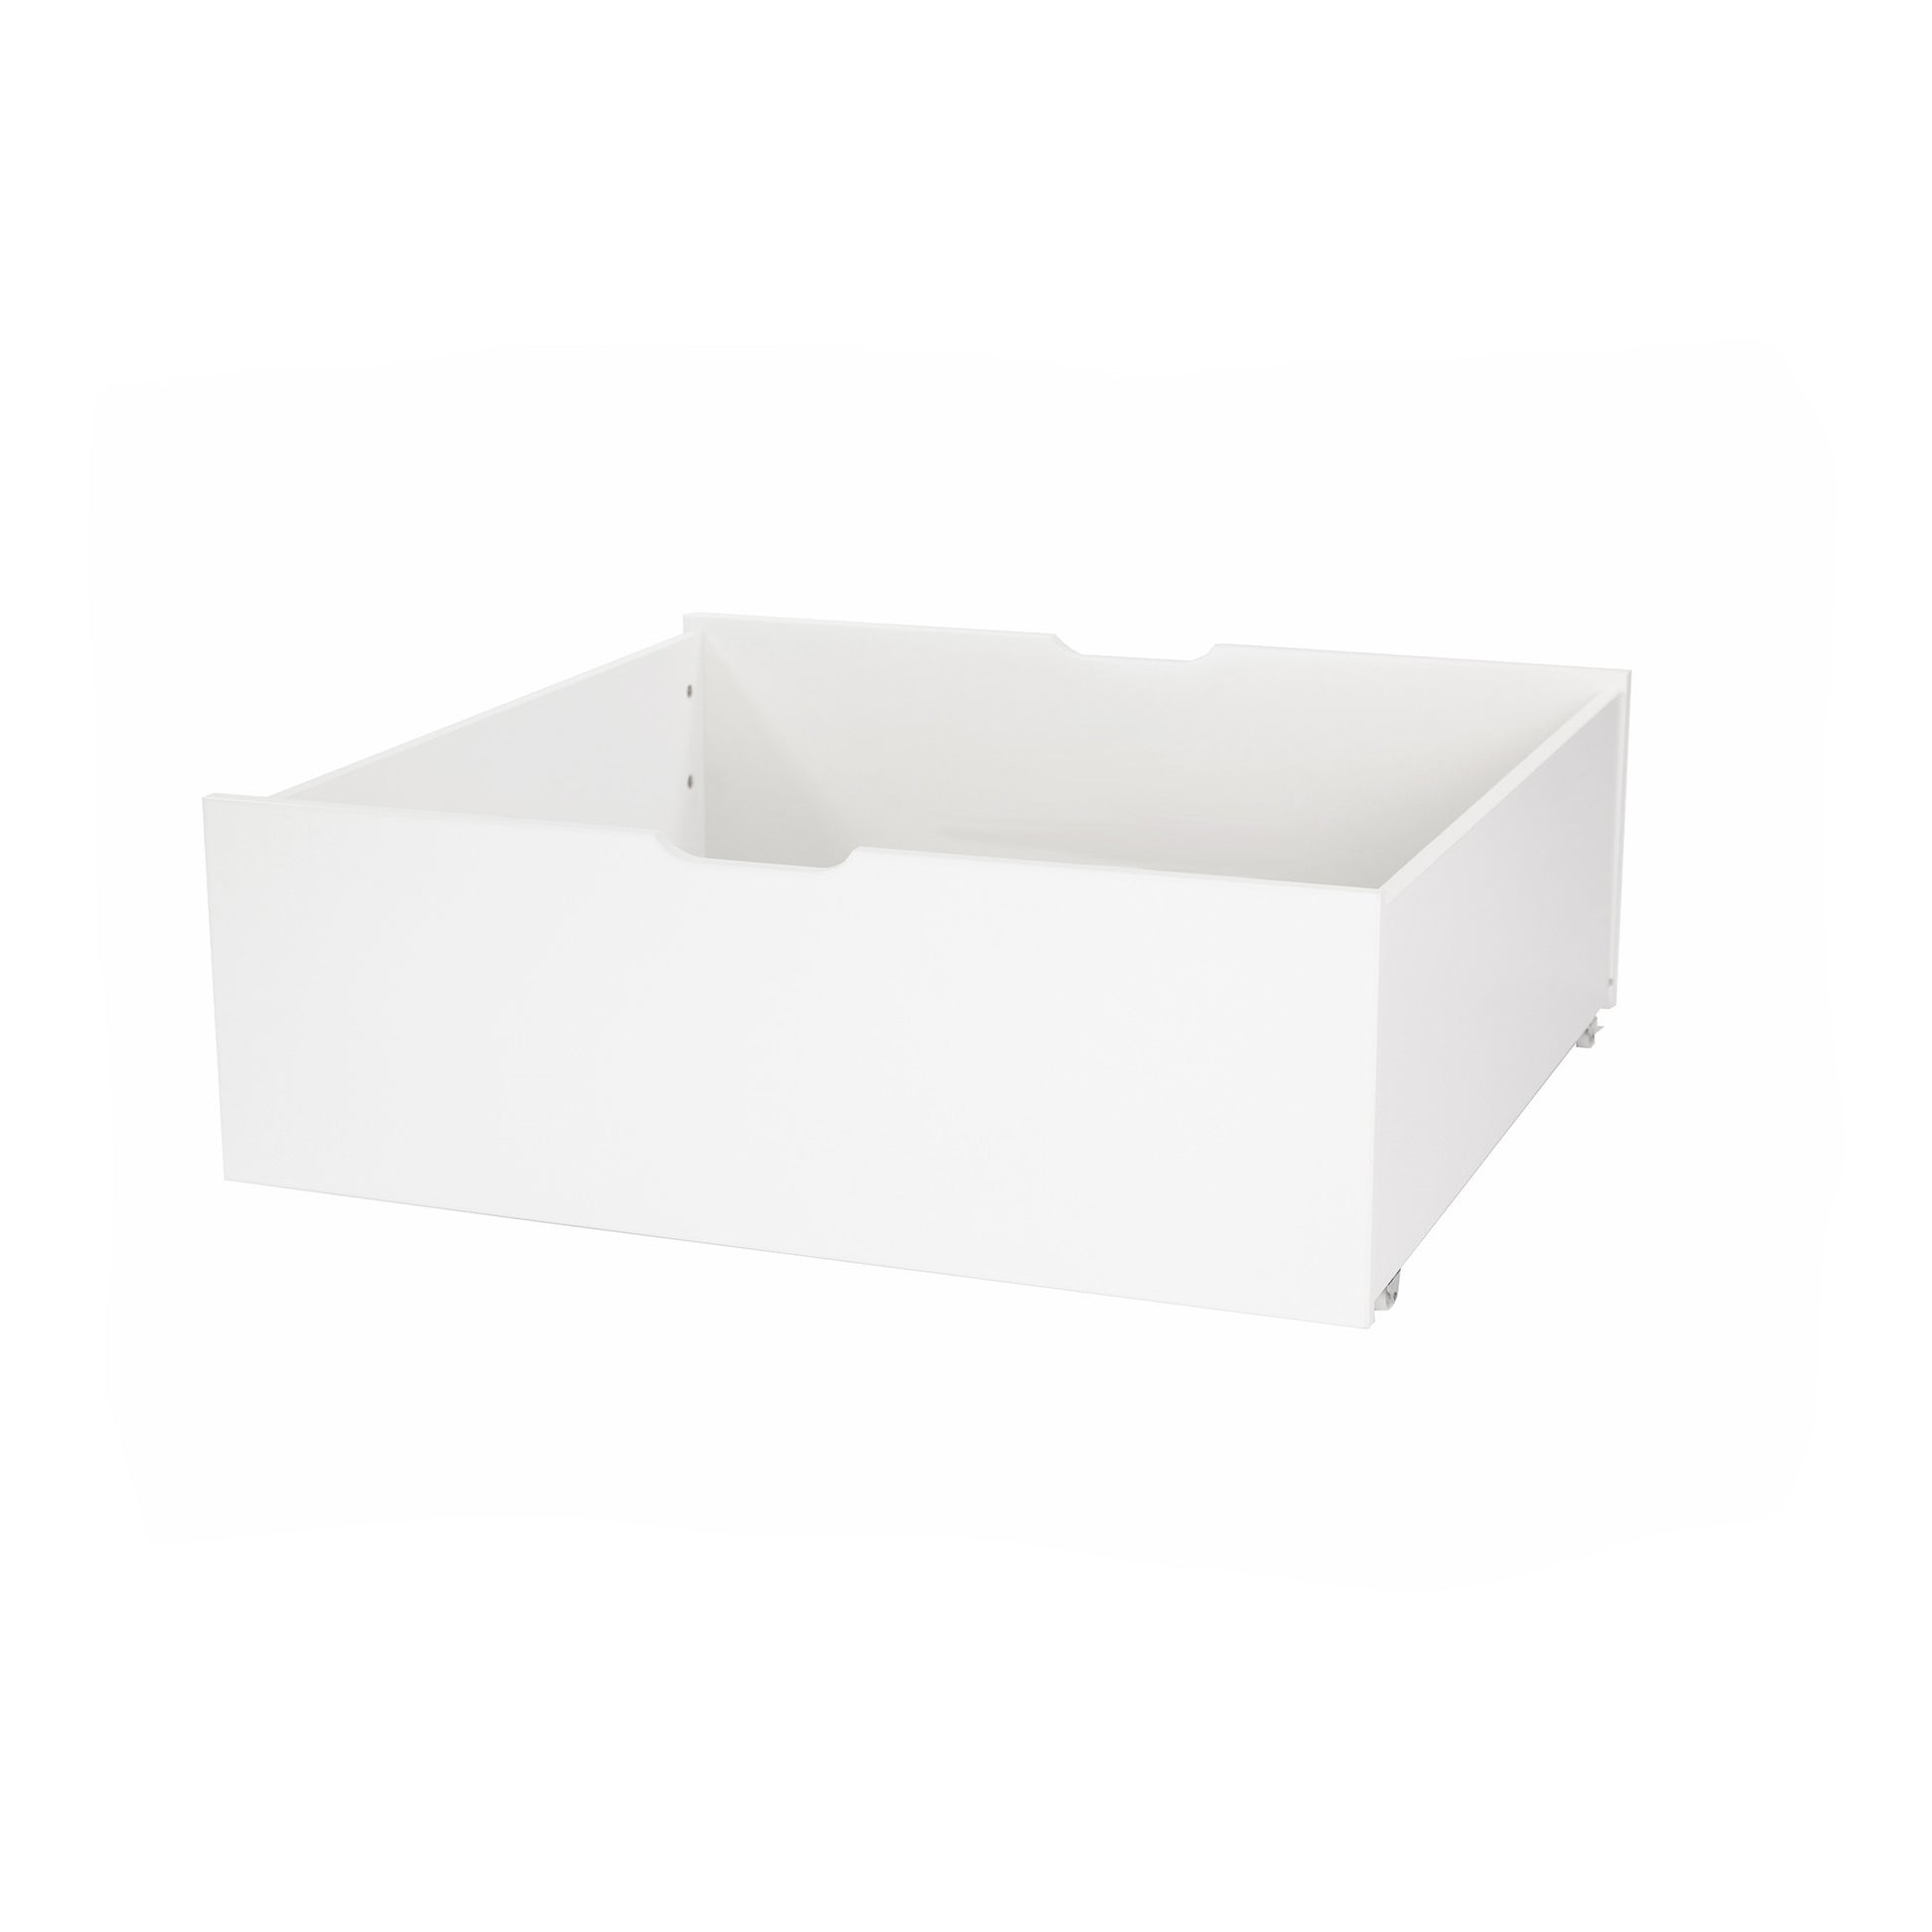 Hoppekids Noah Deluxe Sofa Bed - 90 x 200 cm - White